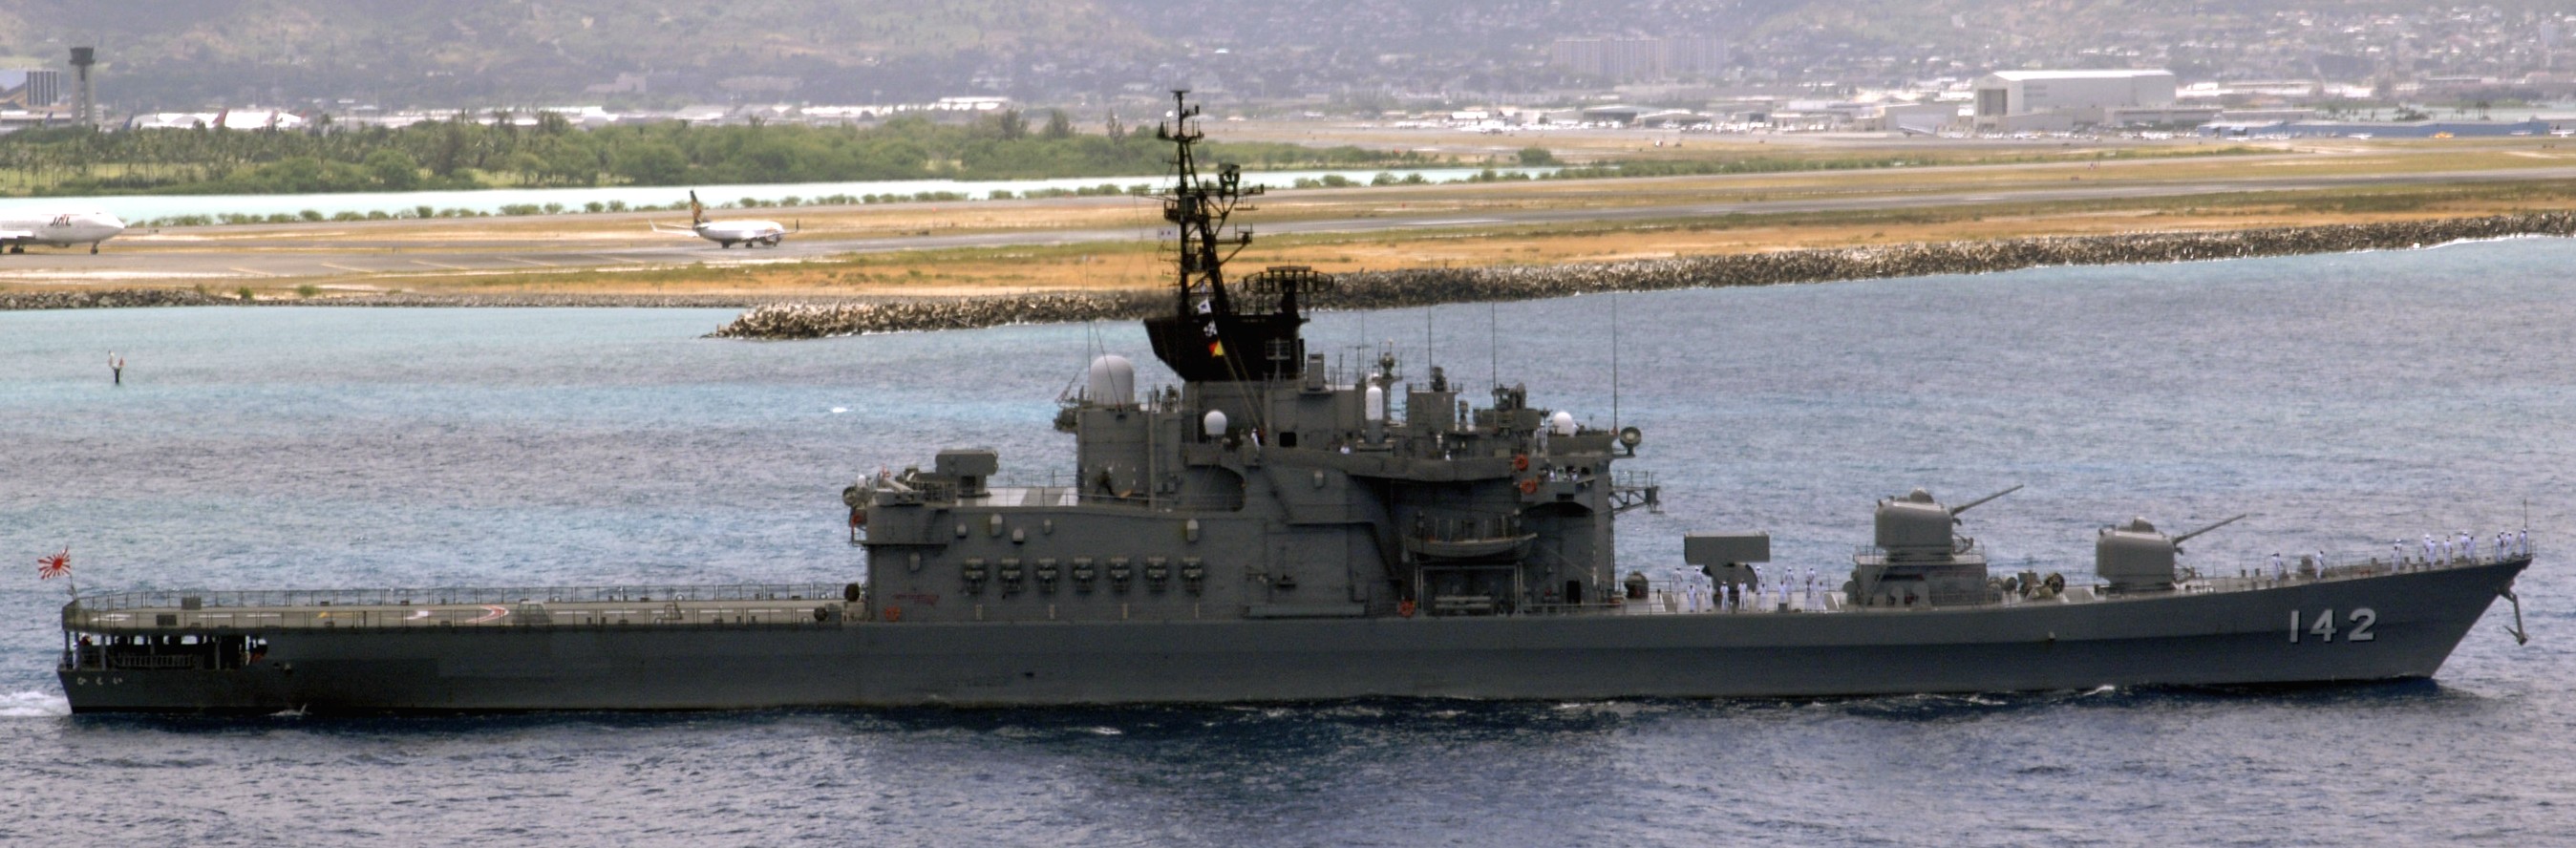 ddh-142 jds hiei haruna class helicopter destroyer japan maritime self defense force jmsdf 13